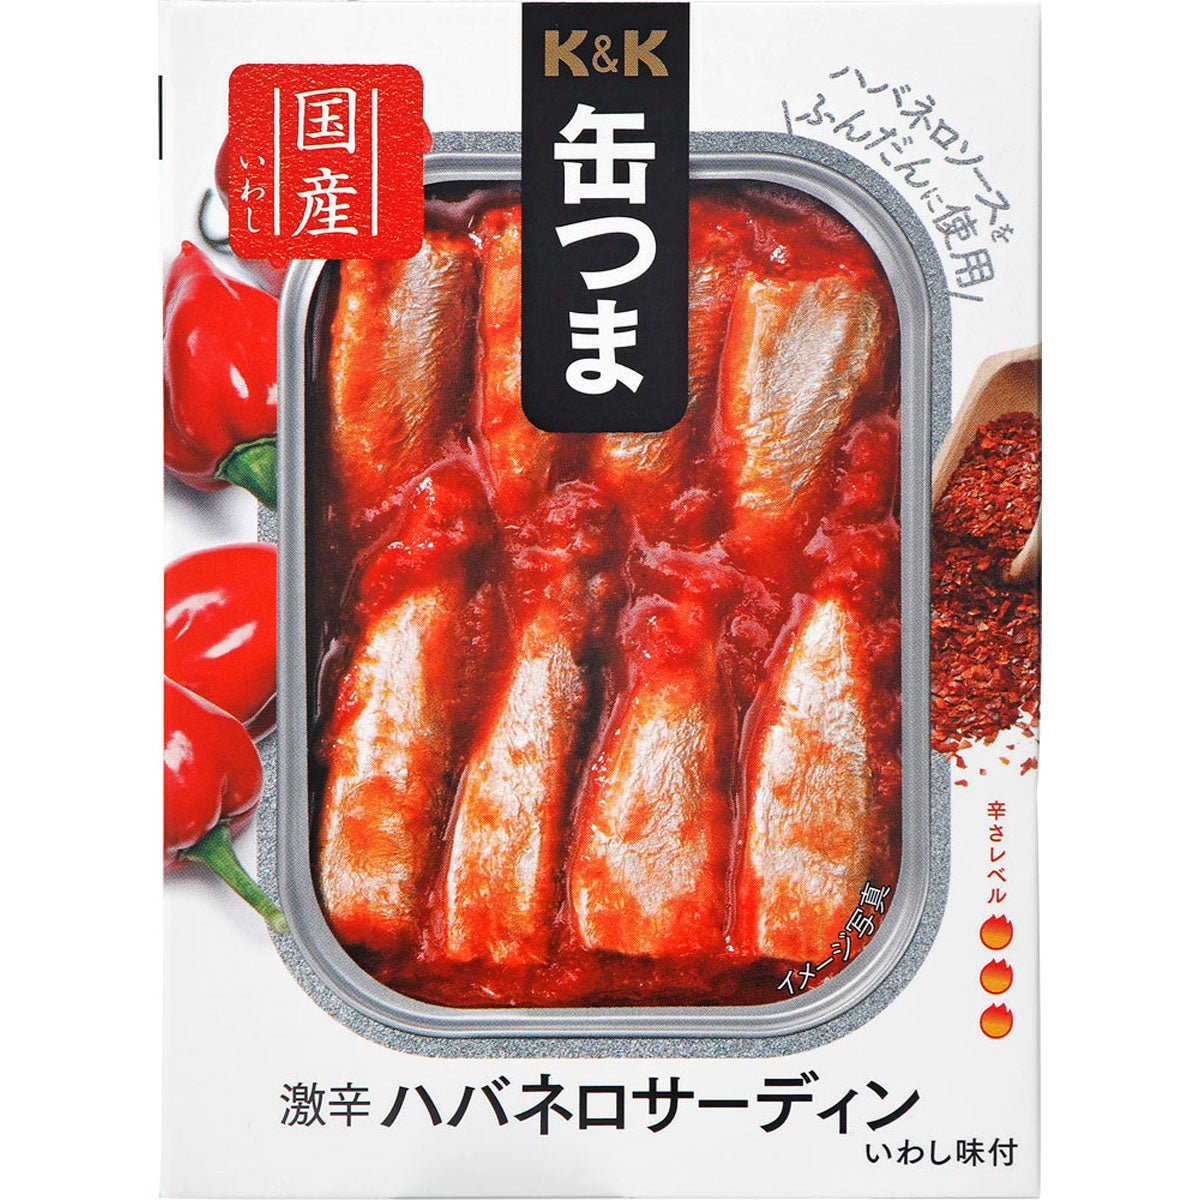 K & K는 뜨거운 매운 habbanero sardine을 tsuma 할 수 있습니다.